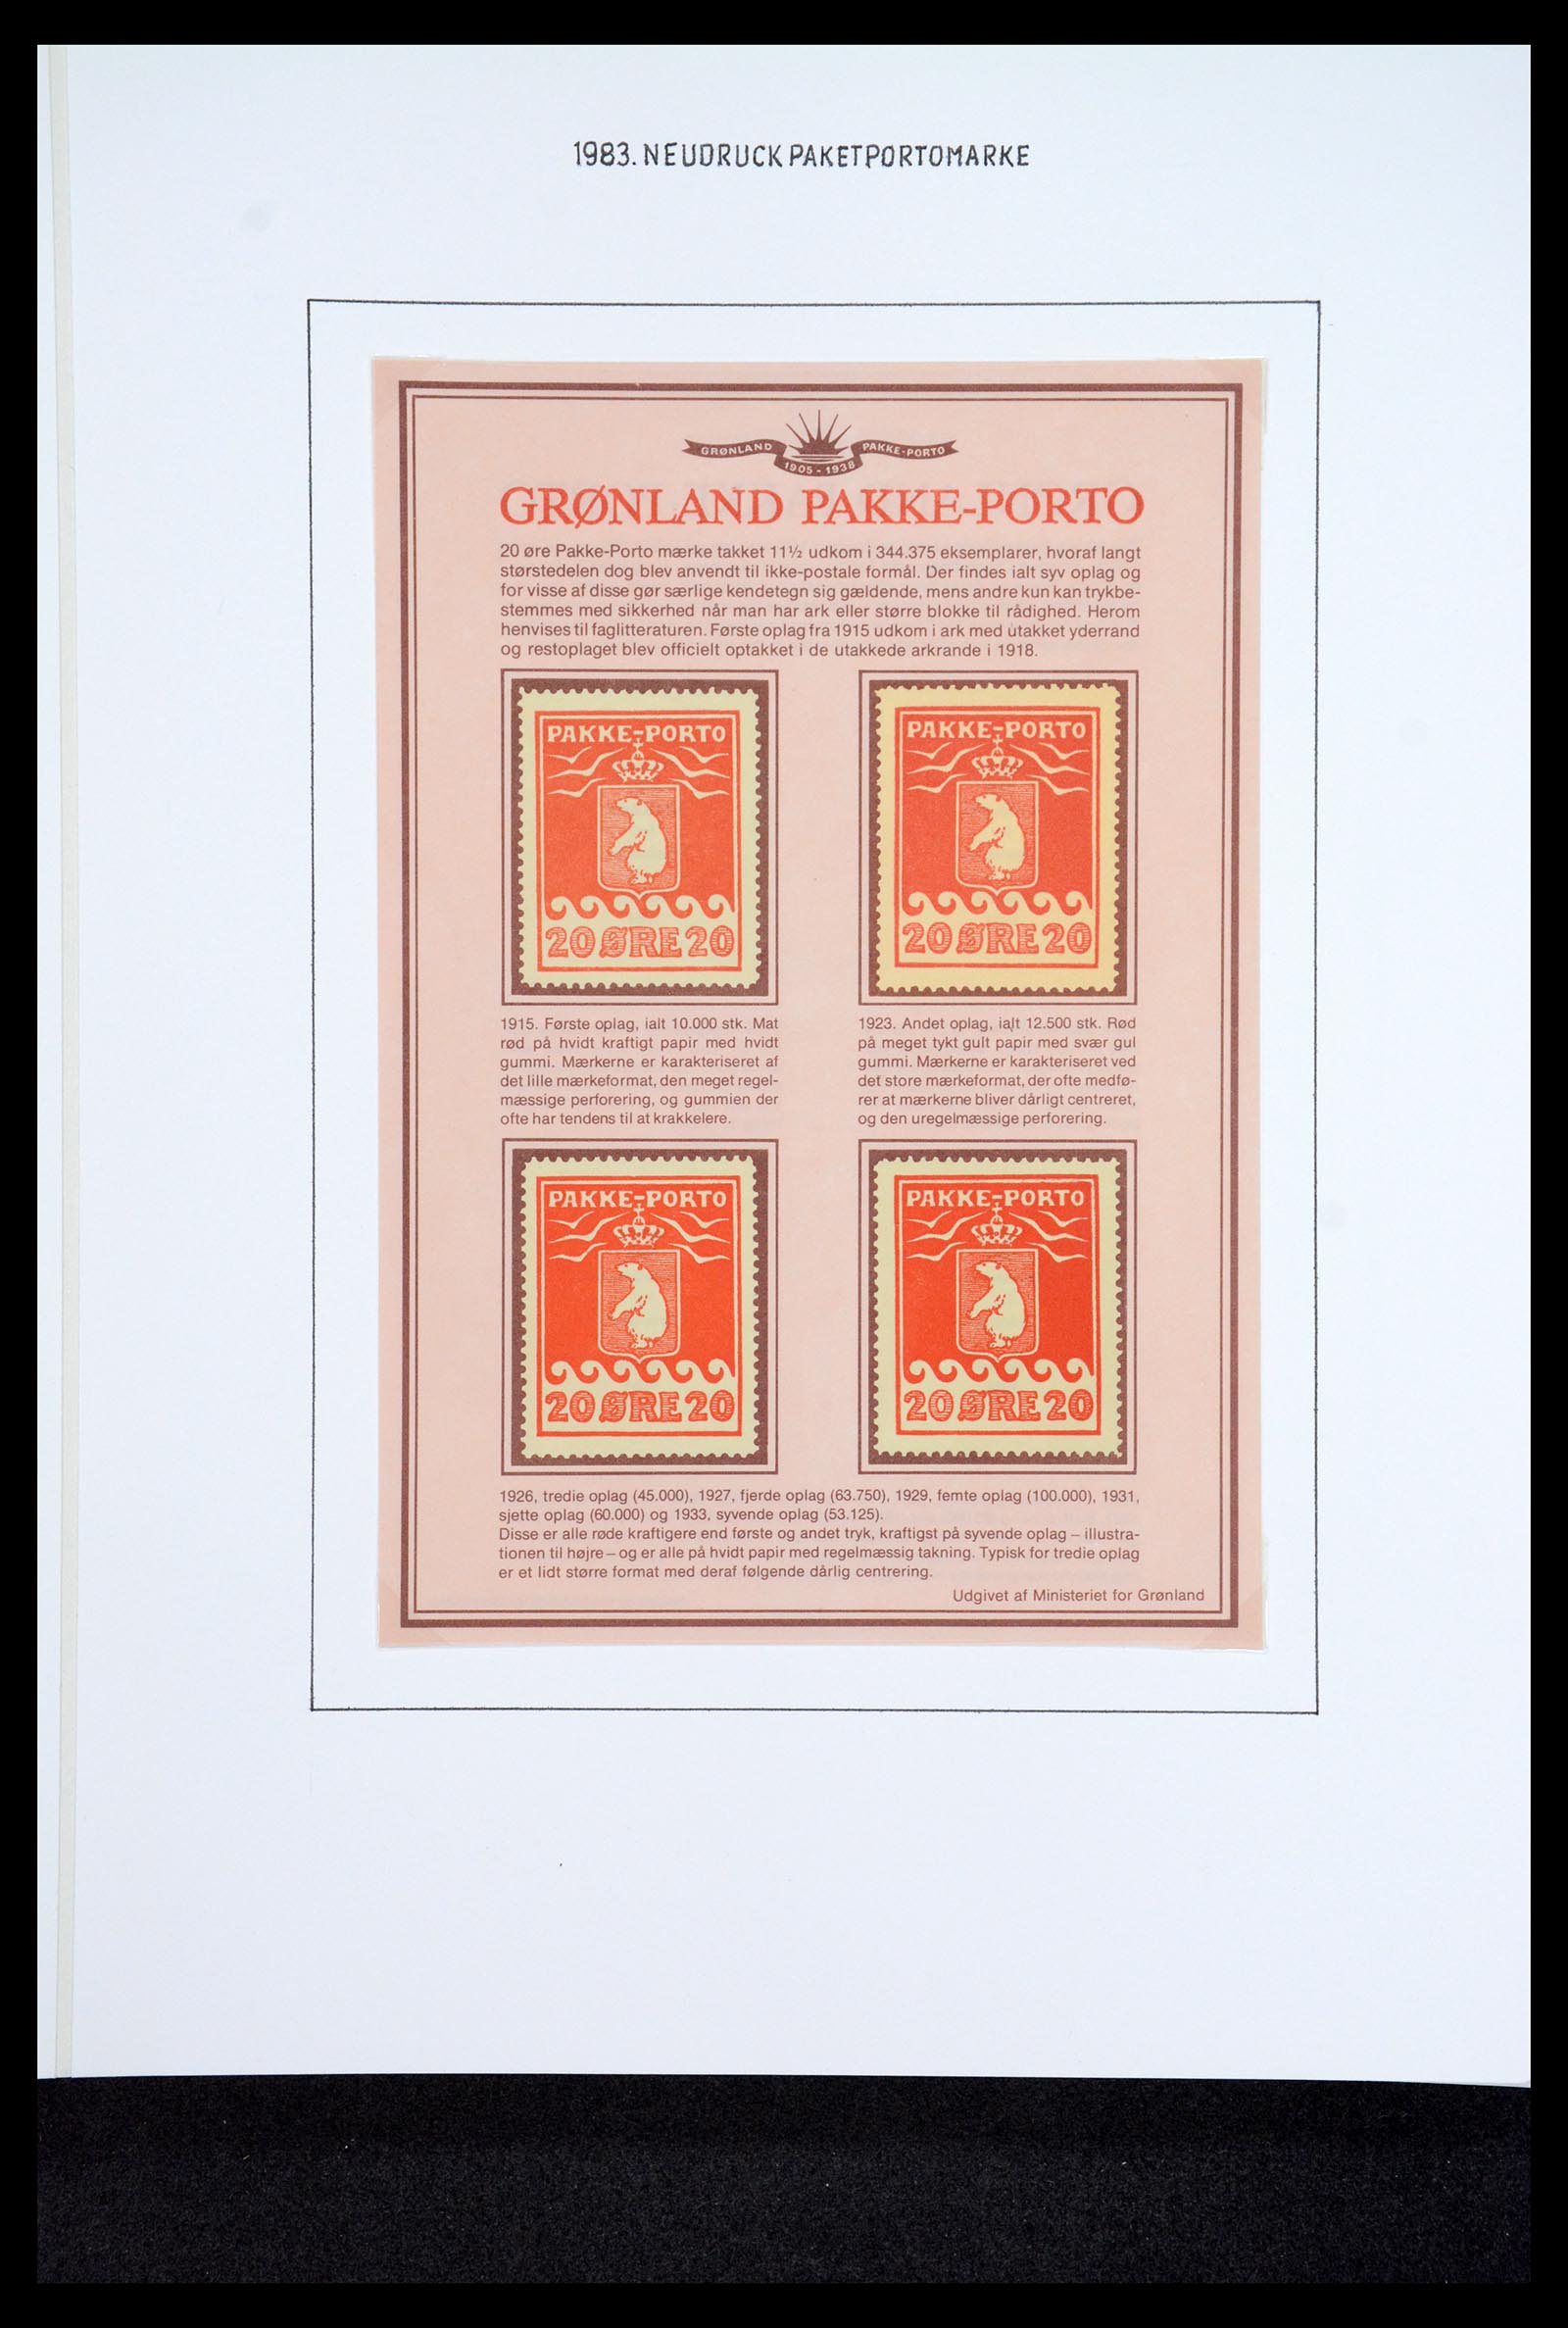 36748 015 - Stamp collection 36748 Greenland pakke-porto 1905-1930.